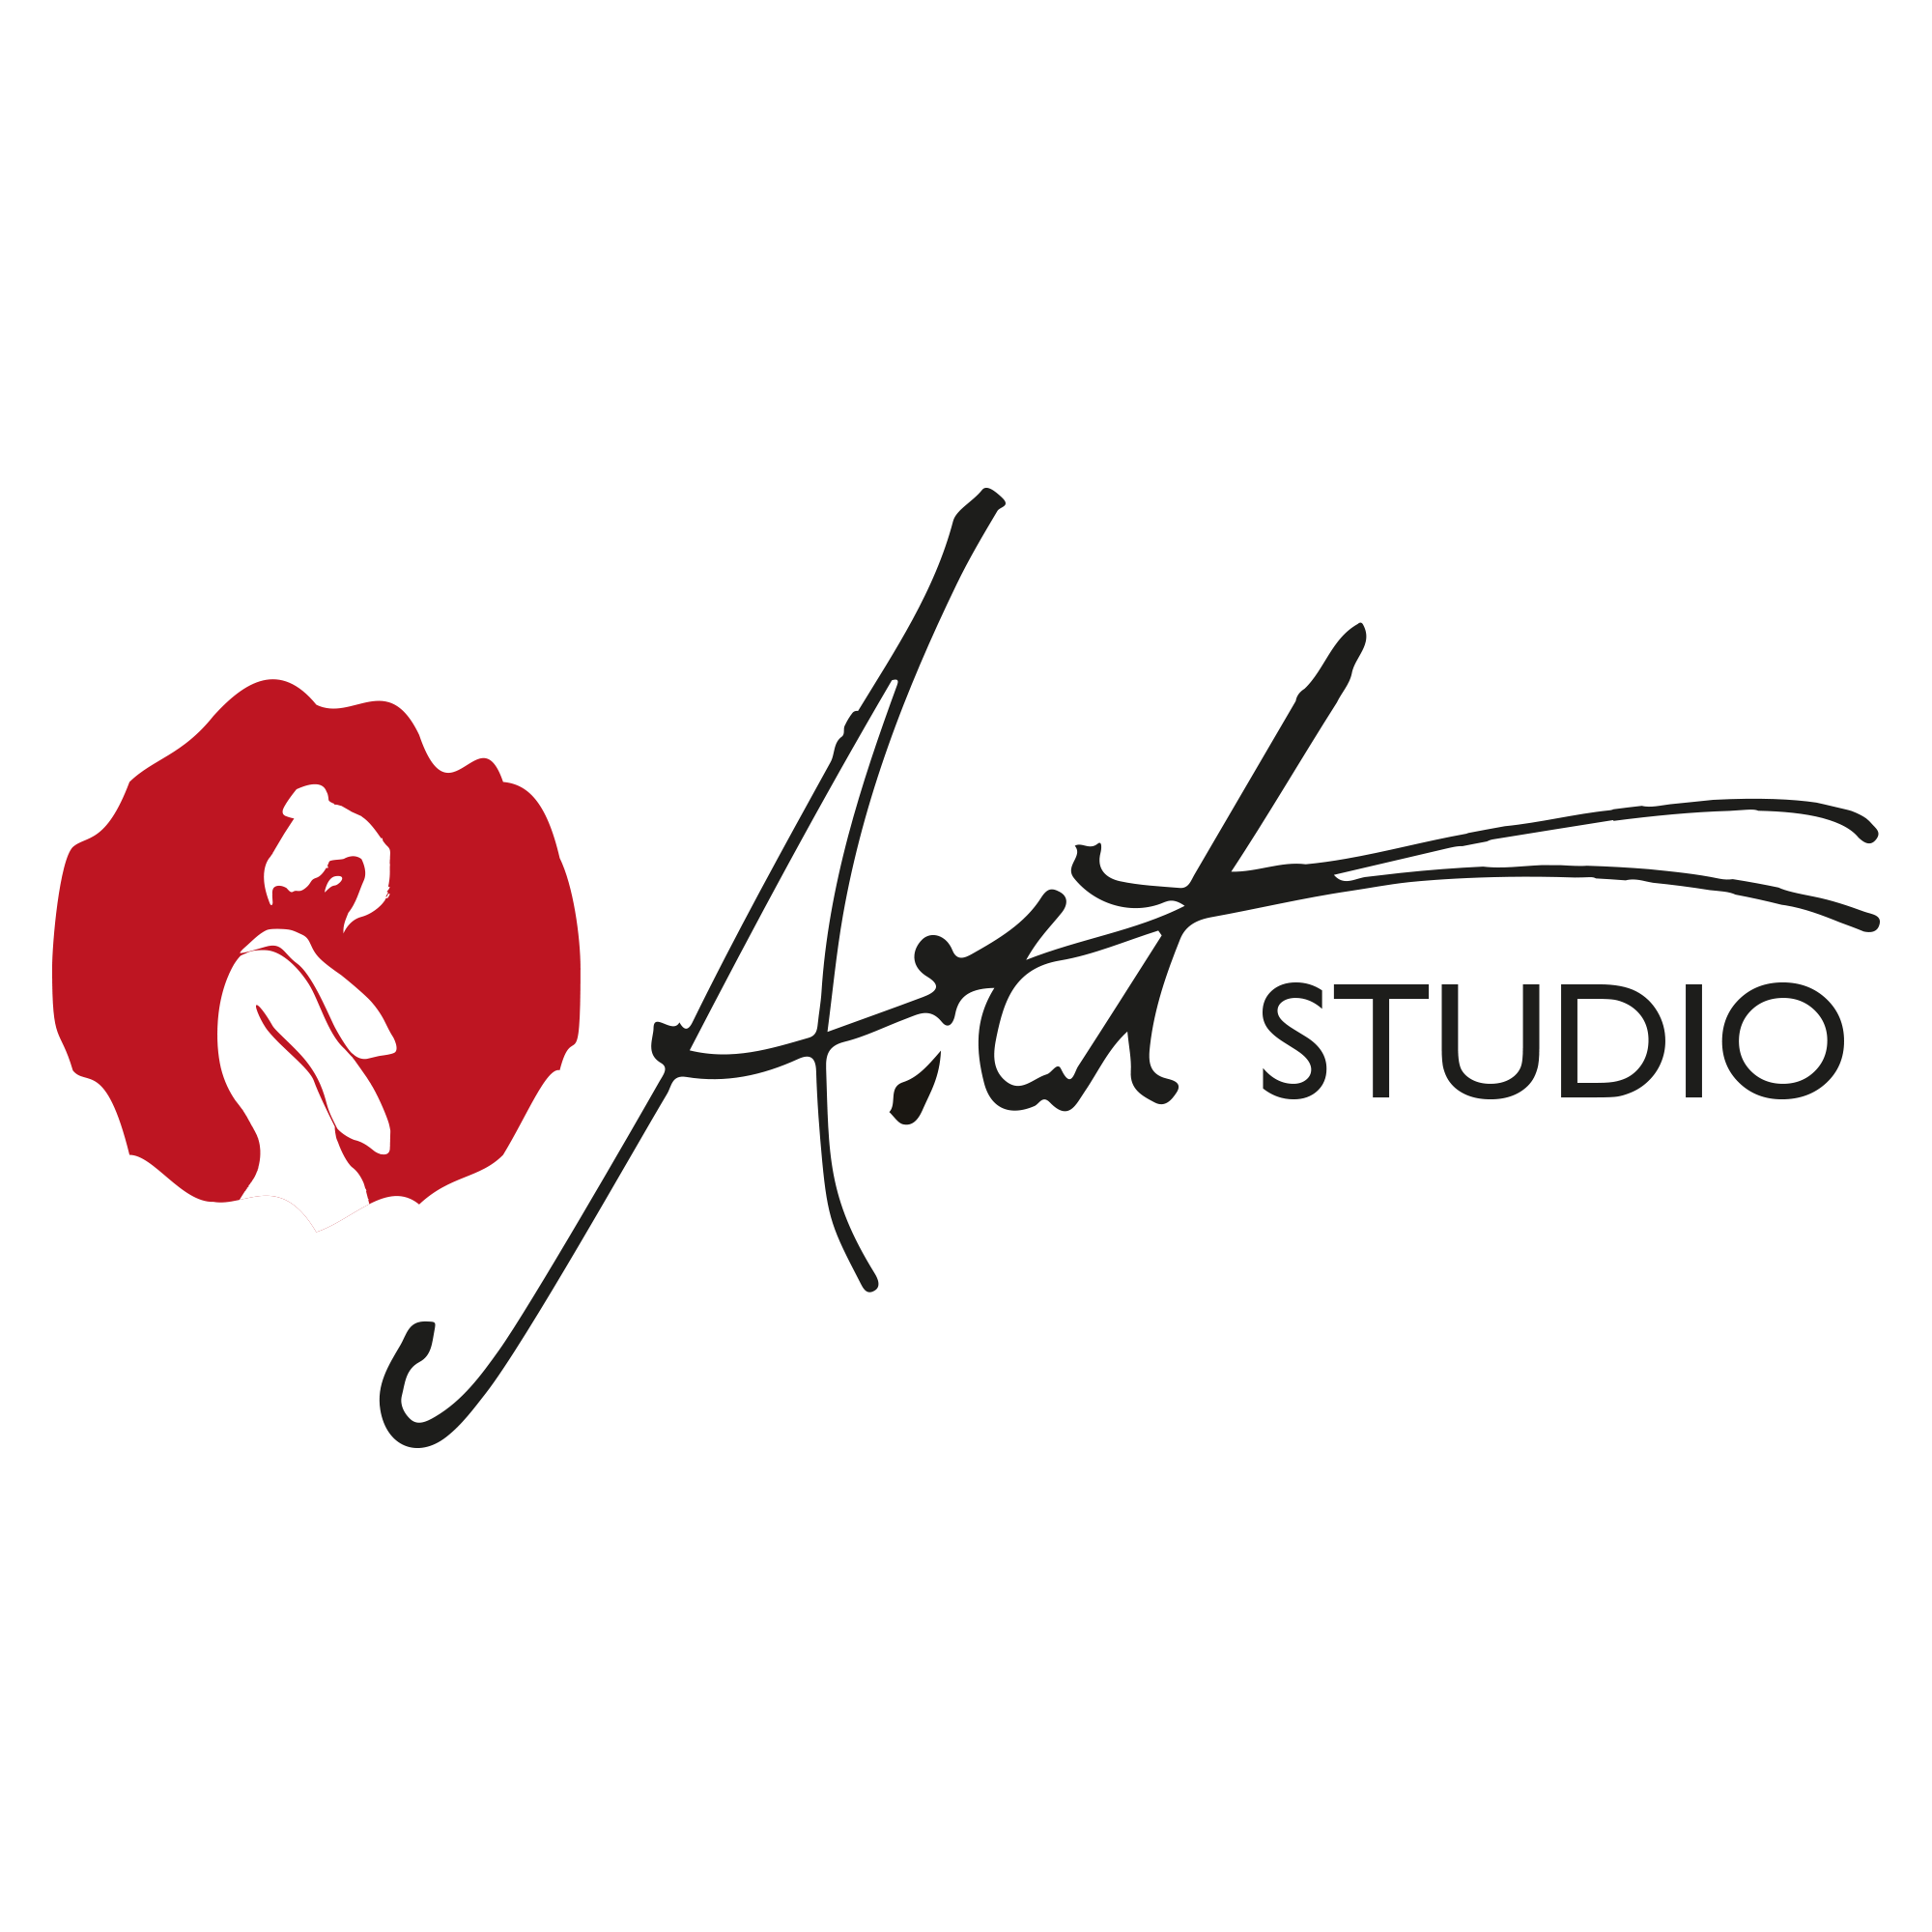 Art Studio | Brands of the World™ | Download vector logos and ...